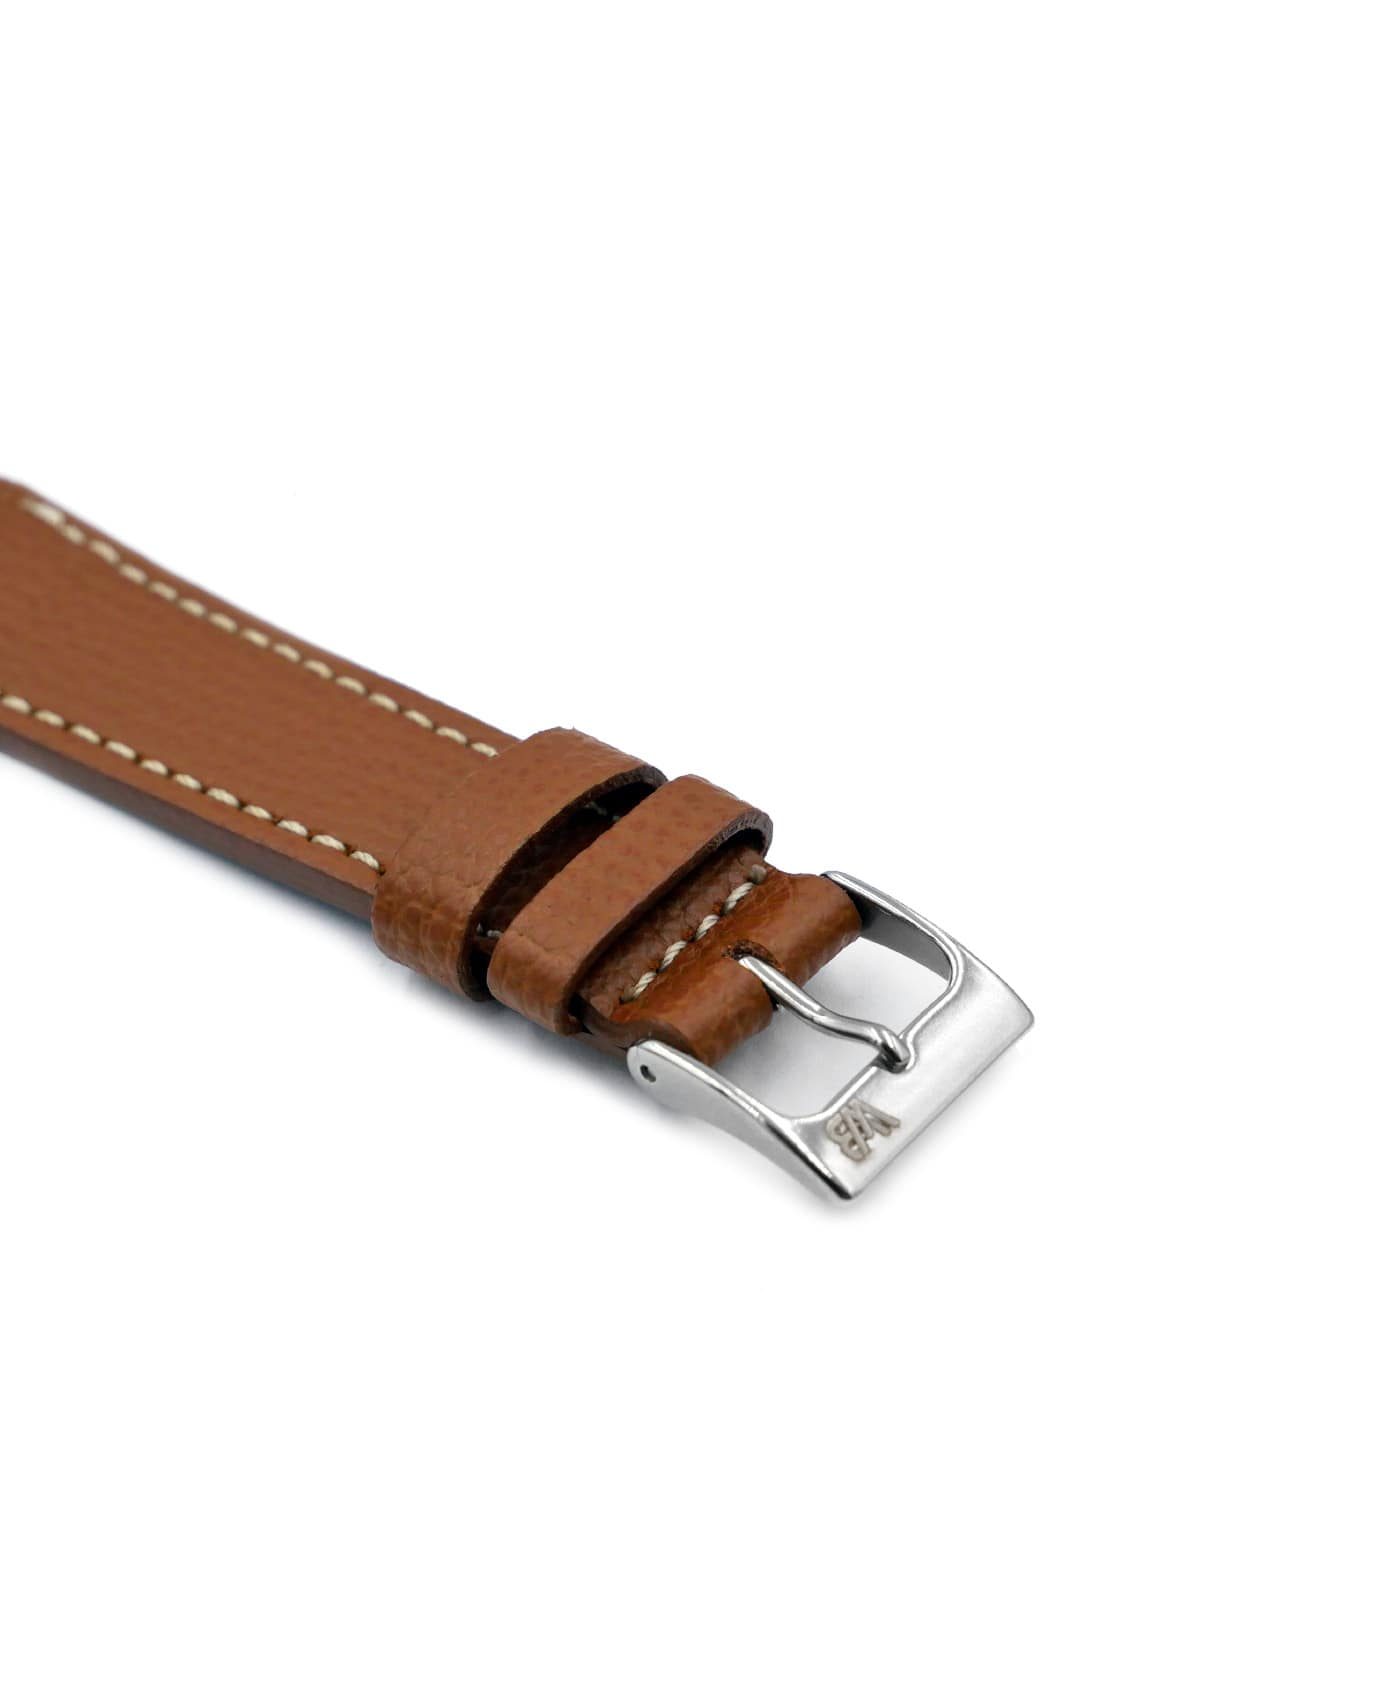 Textured calfskin leather watch strap tanned light brown side watchbandit